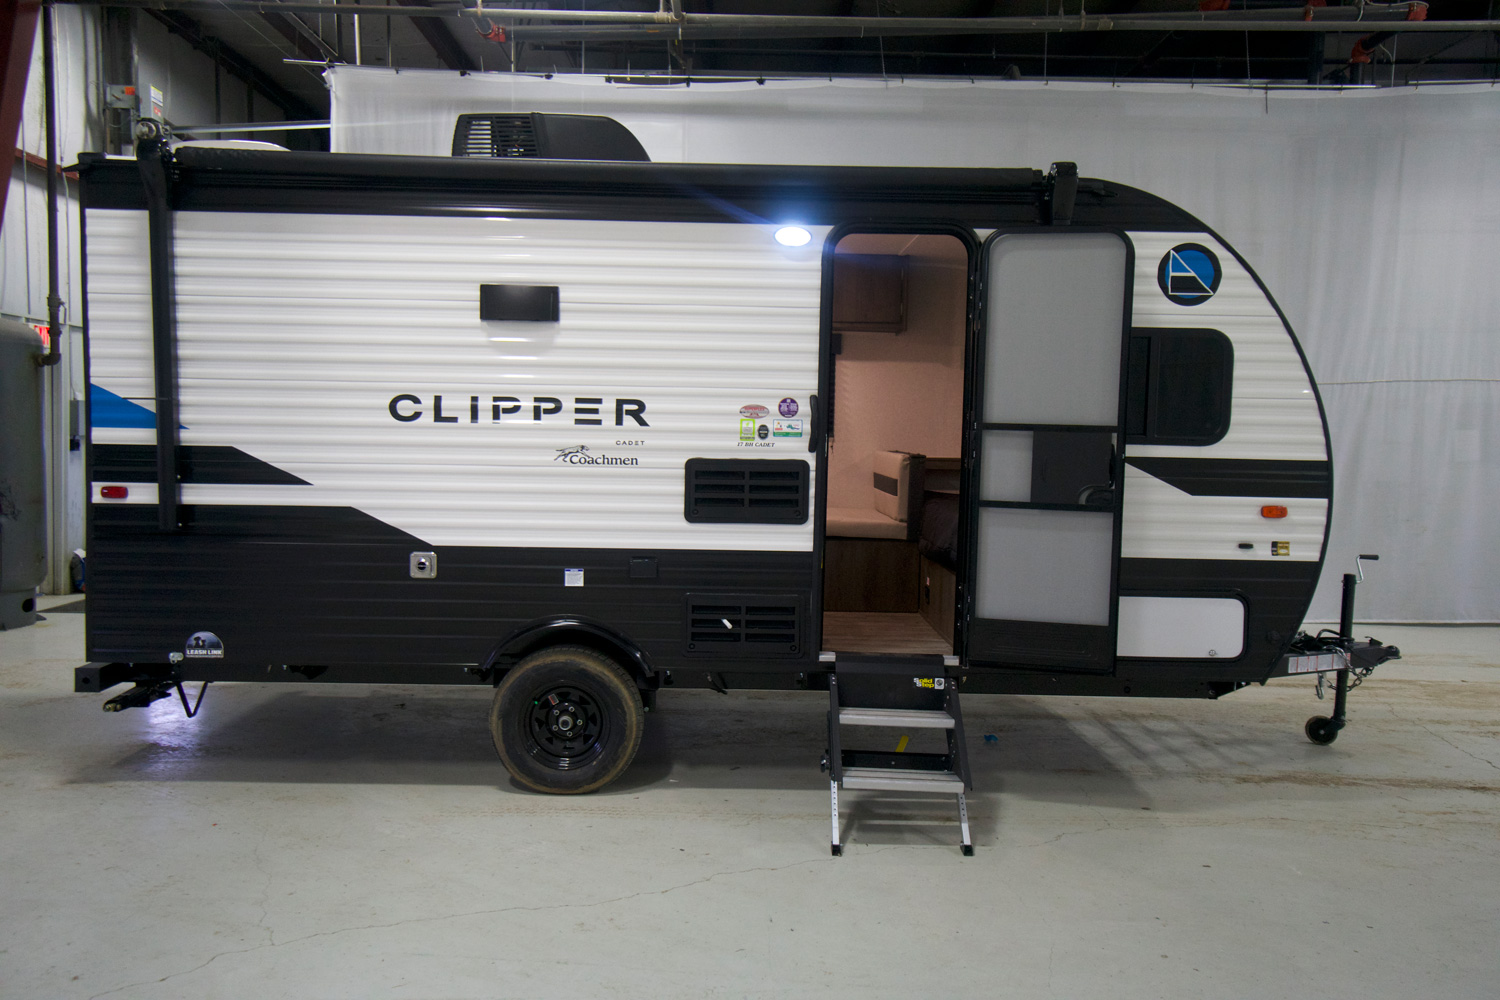 Clipper Ultra Lite 21CBH Travel Trailers by Coachmen RV